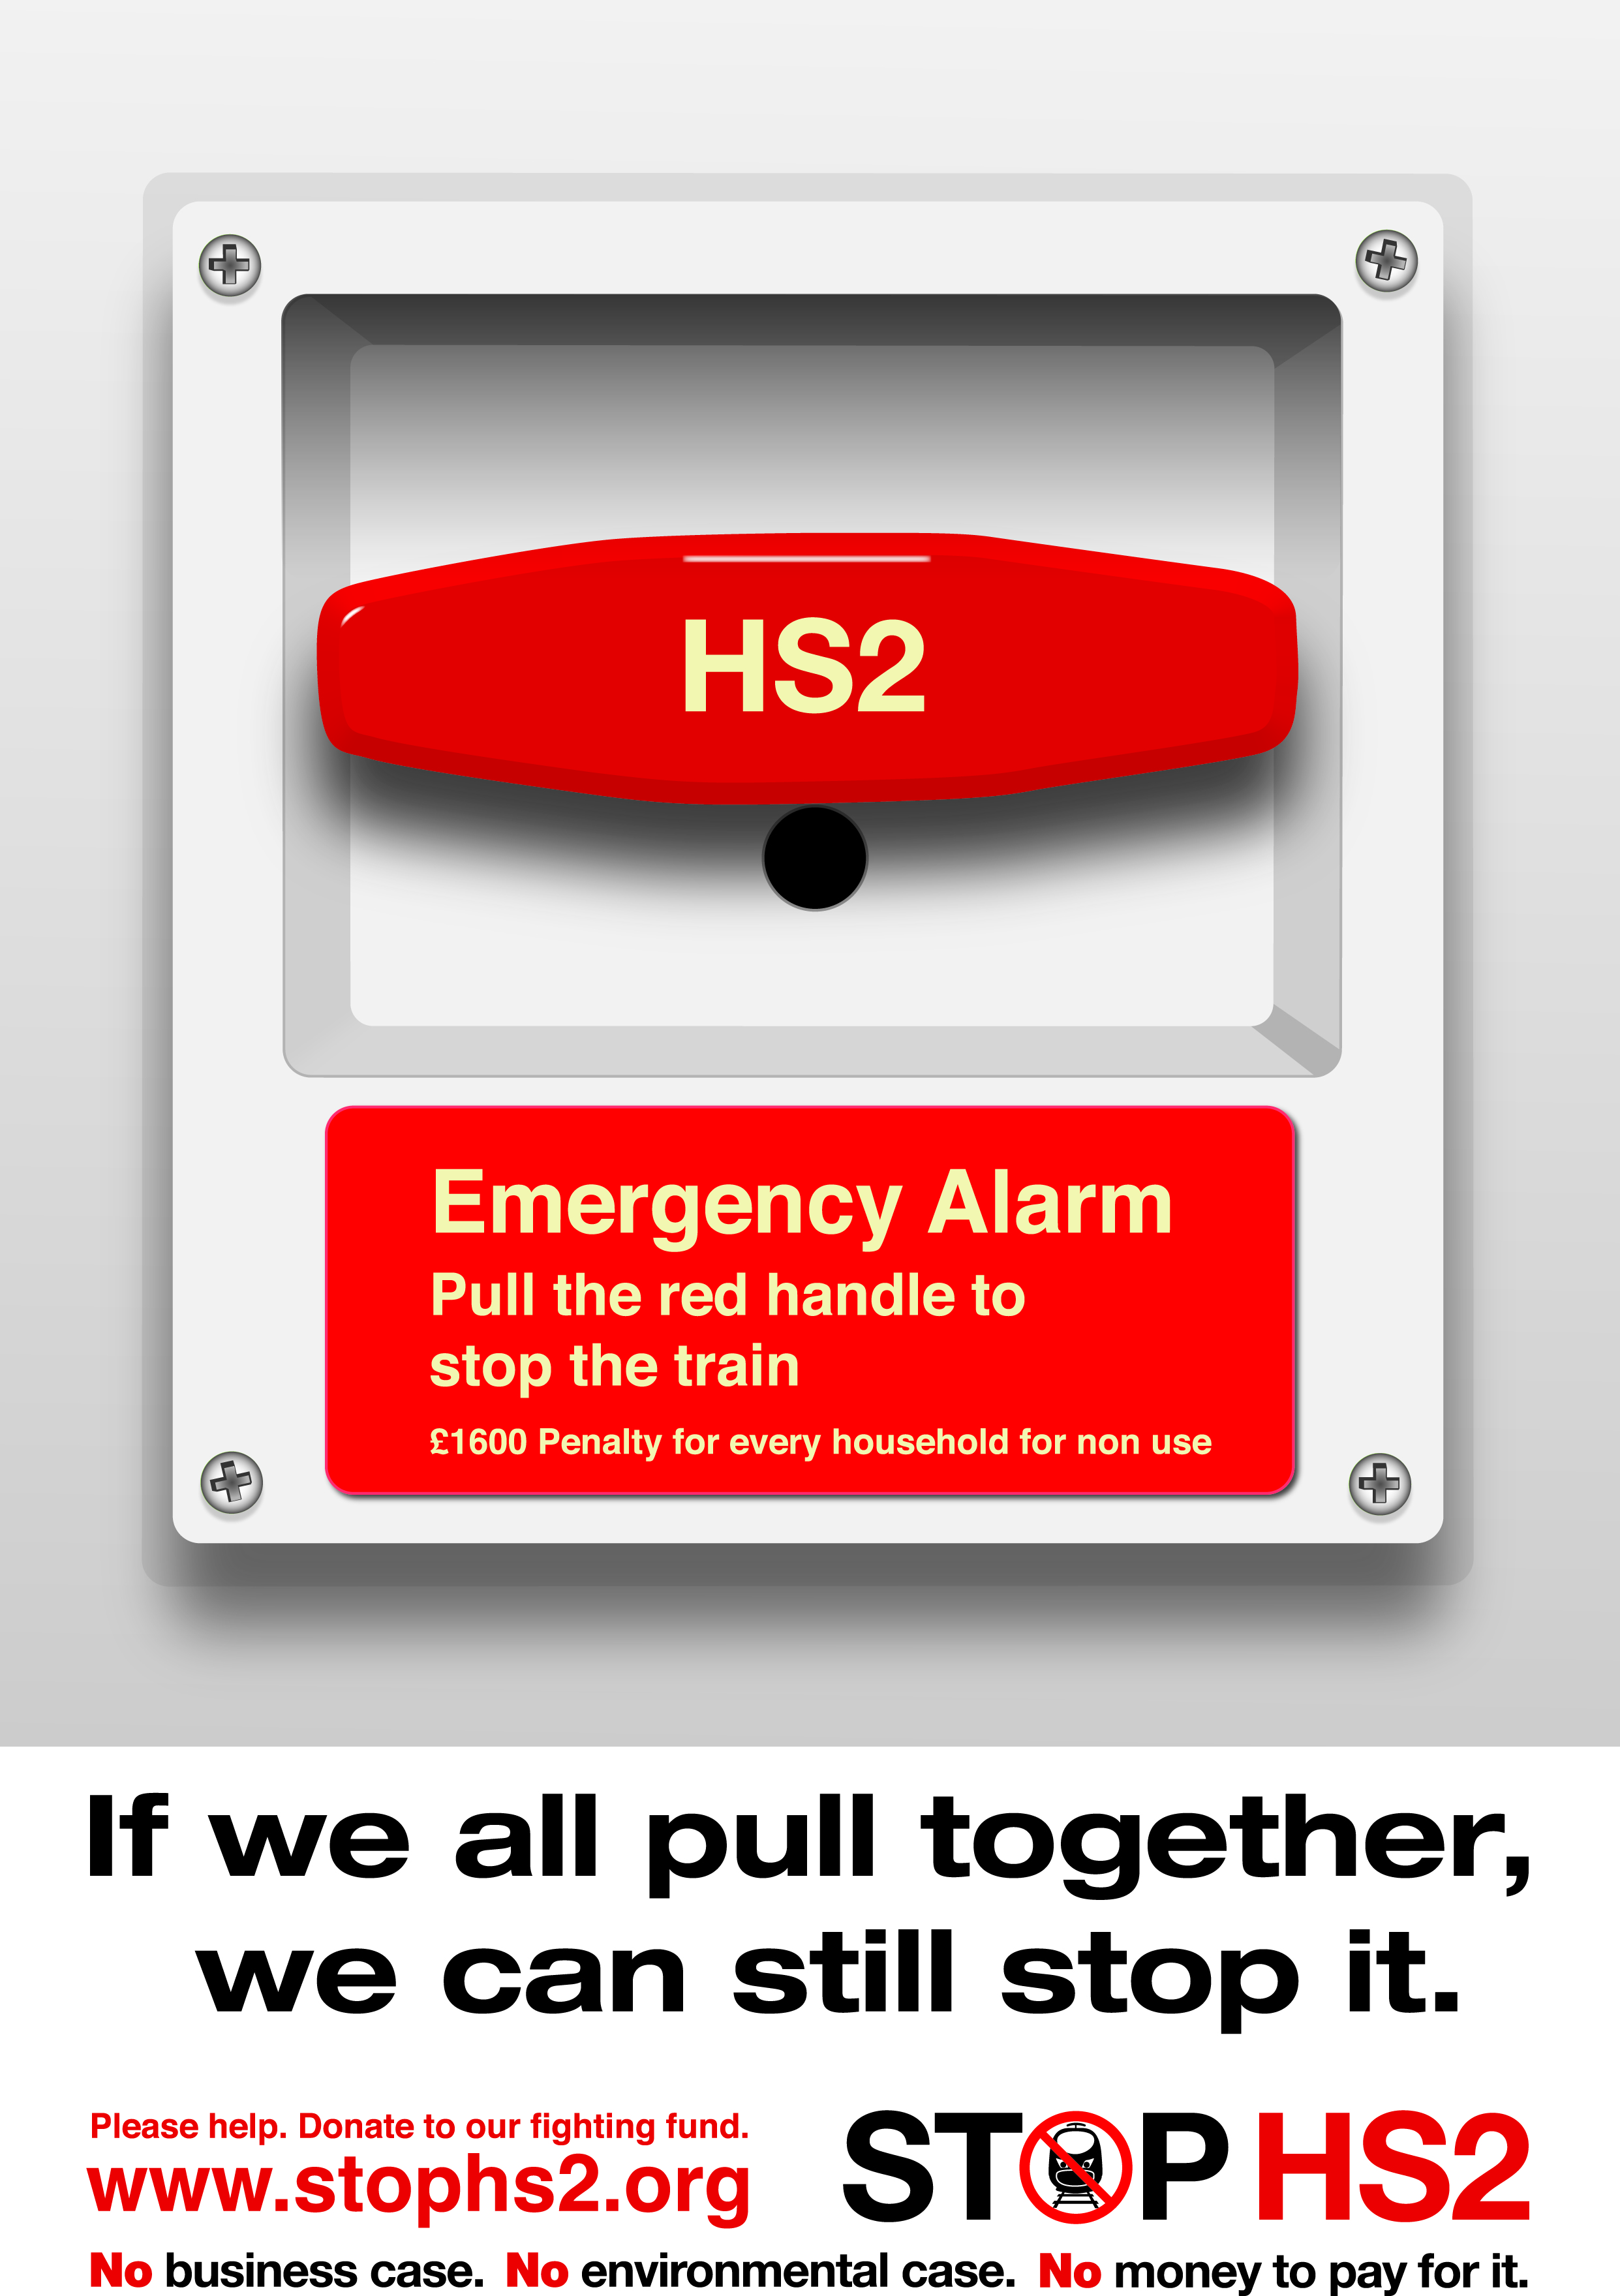 Emergency Stop HS2 Alarm